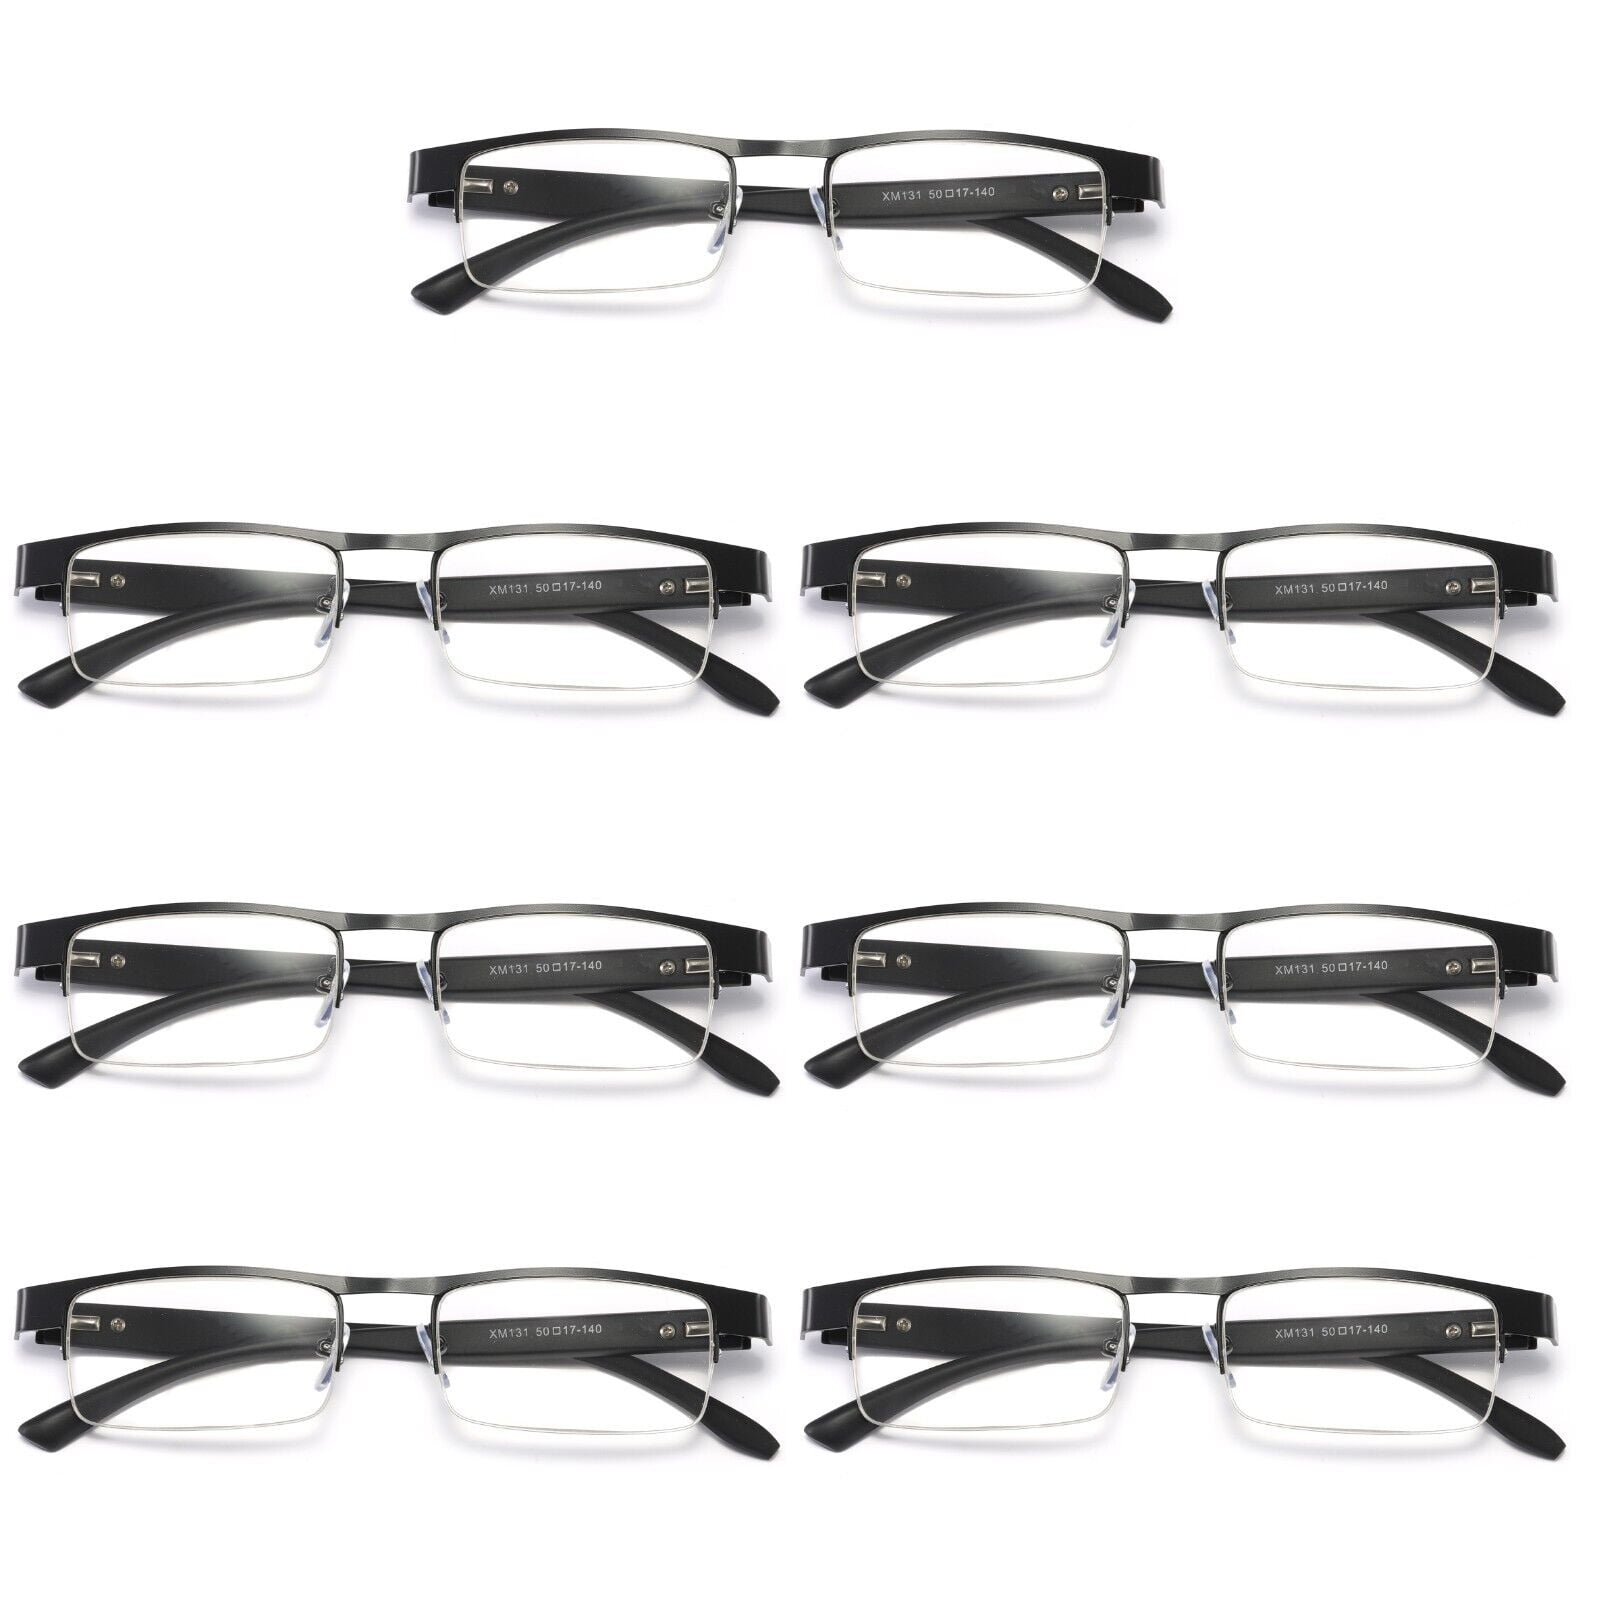 7 Pairs Mens Rectangular Metal Half Frame Reading Glasses Spring Hinge Black Readers 0 75